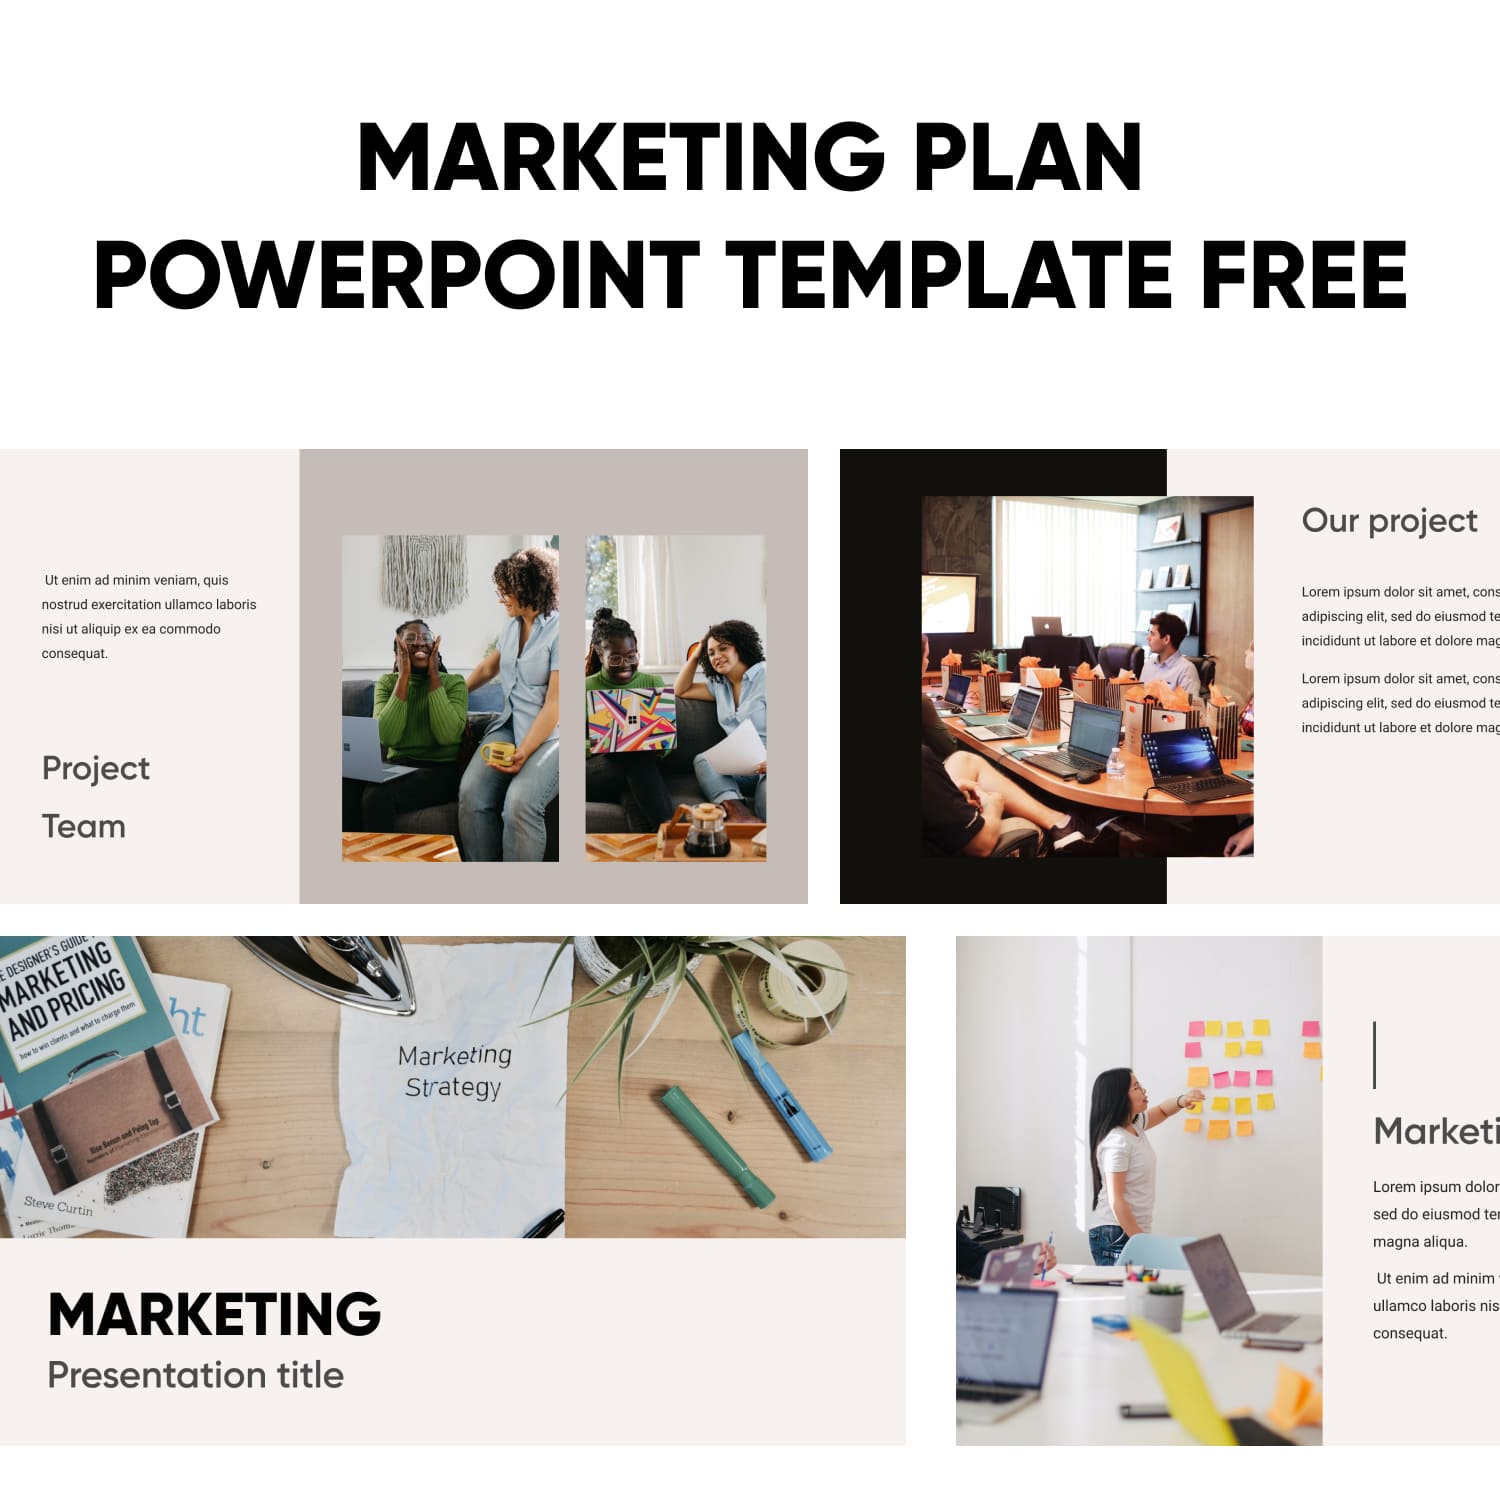 Marketing Plan Powerpoint Template Free 1500x1500 1.